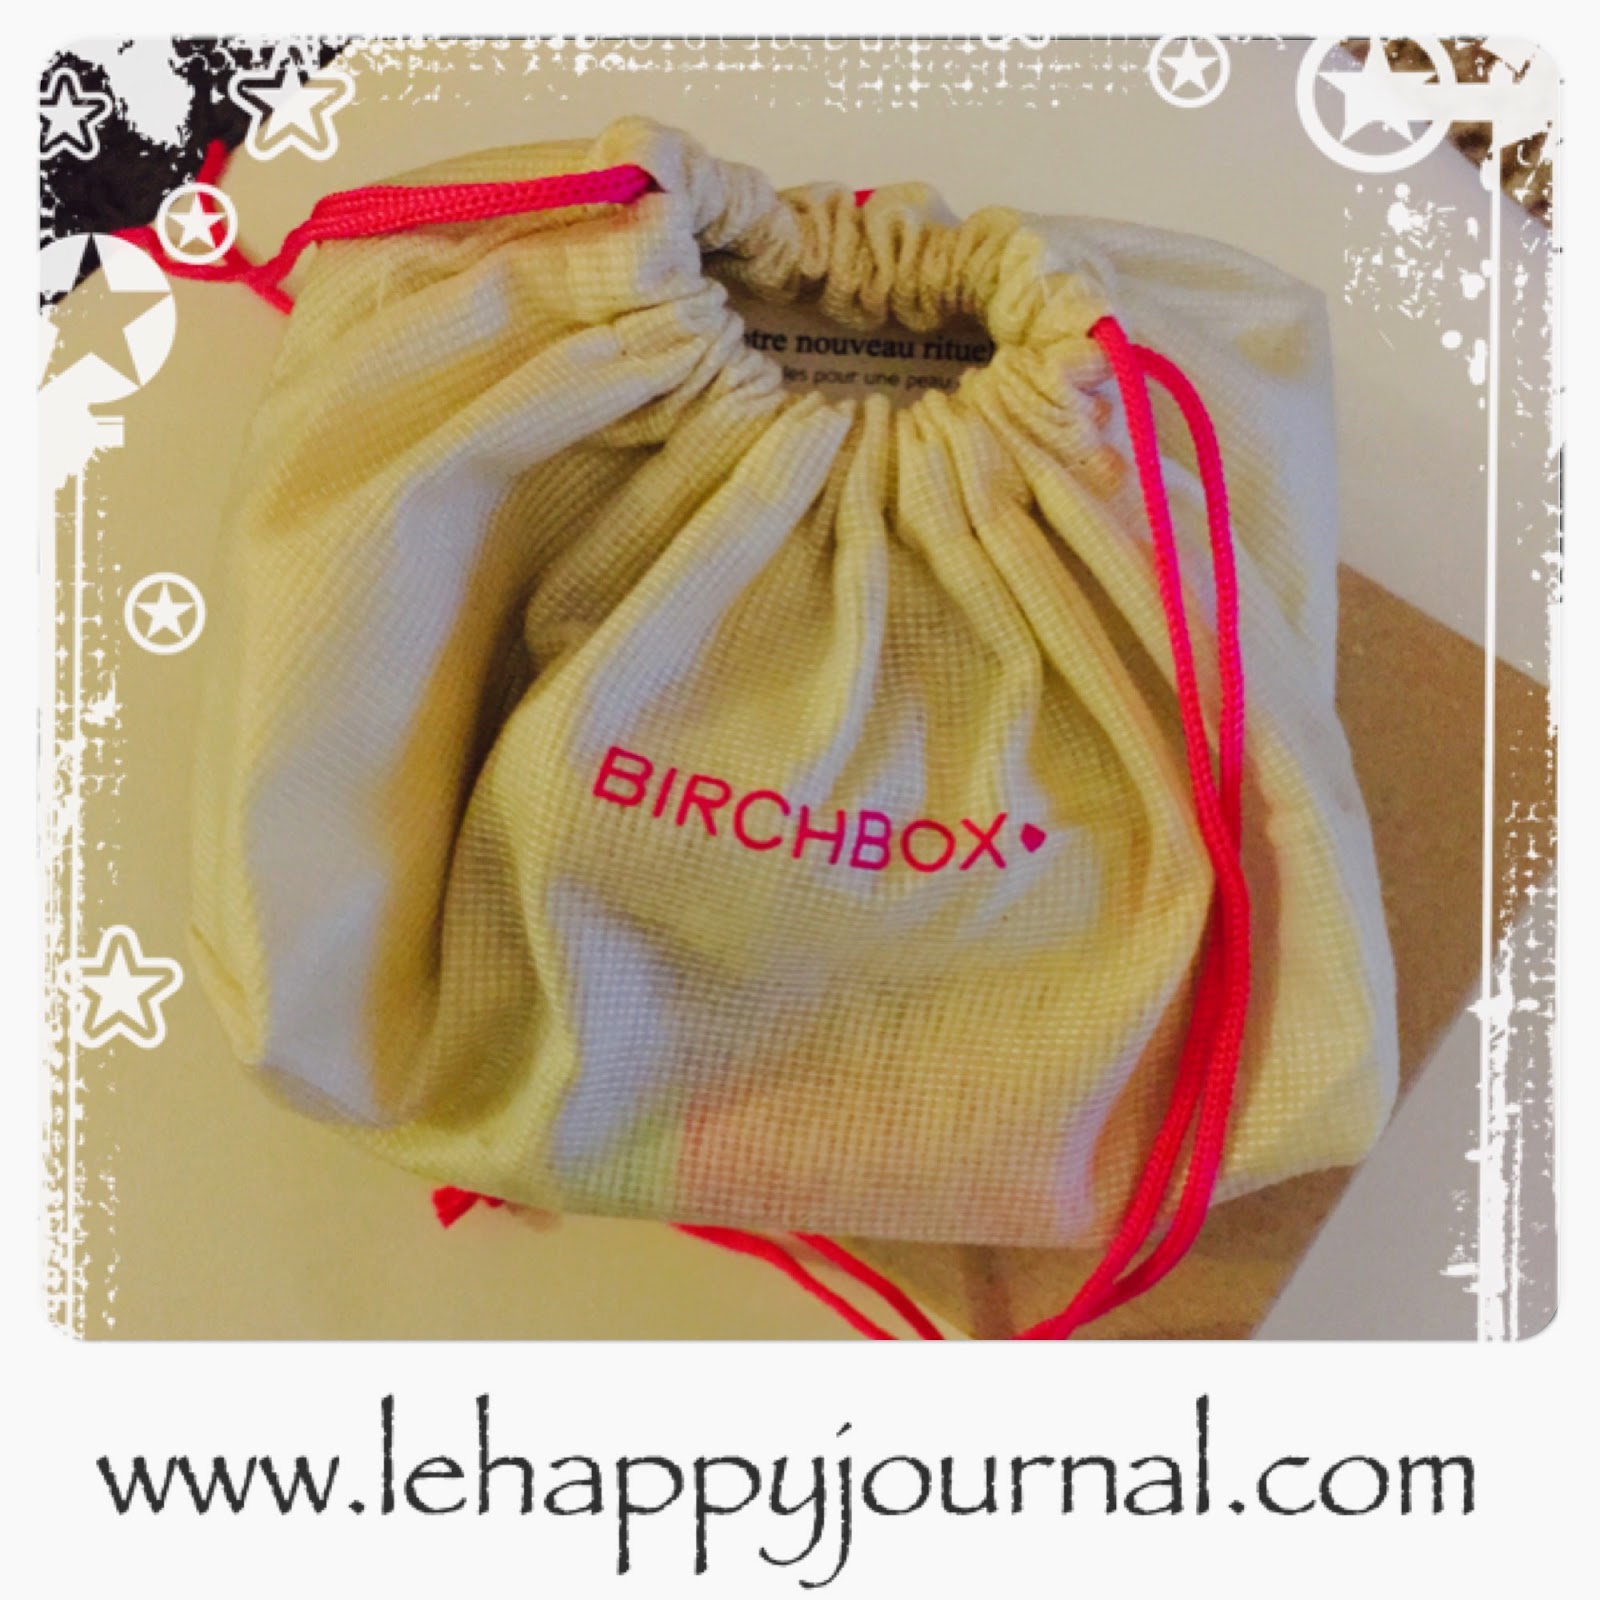 birchbox, novembre, box, paul and joe, stella and dot, ghd, DHC, sabon, pixi, beaver, happy journal